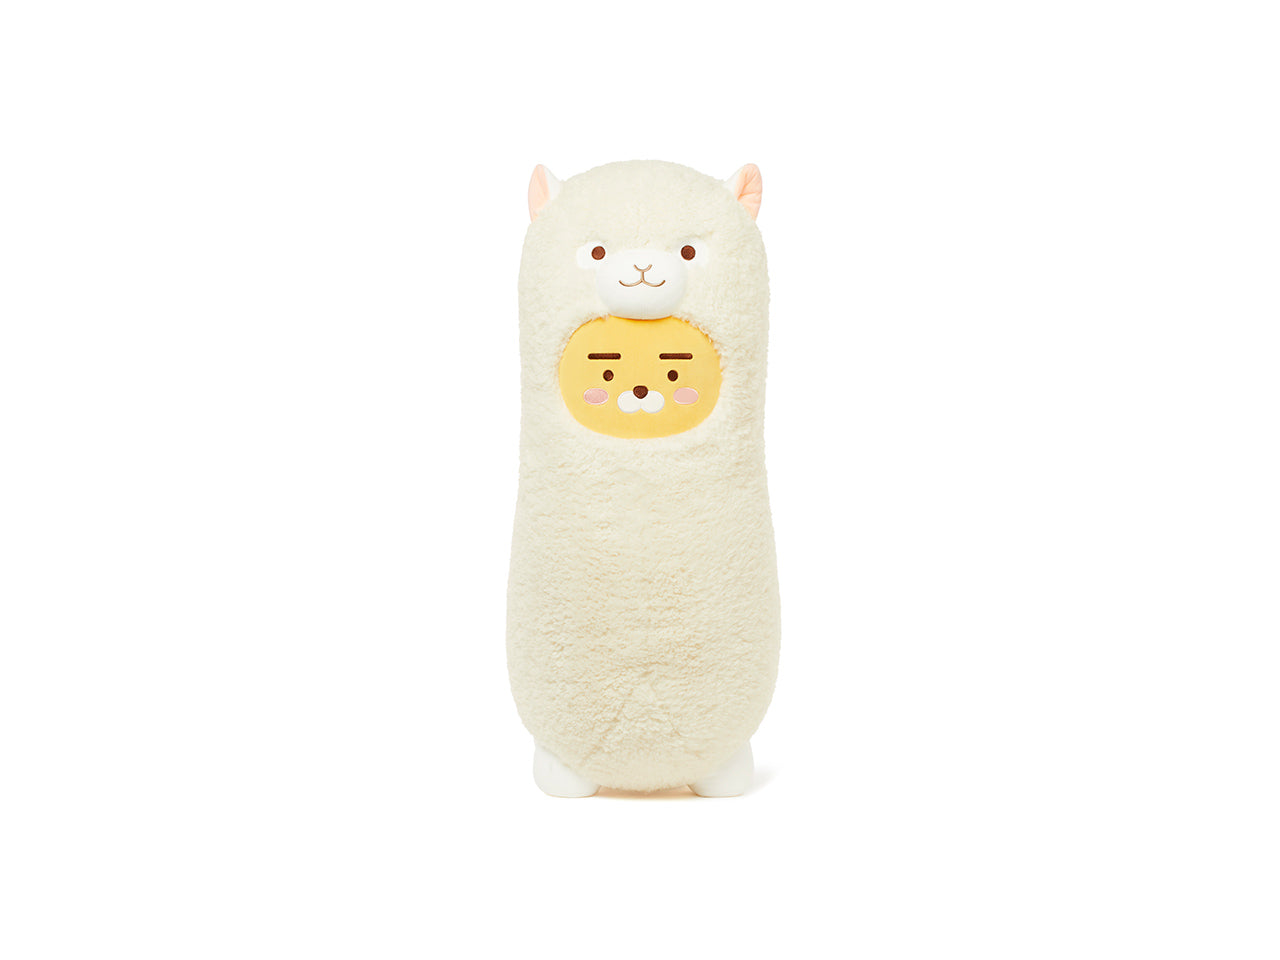 kakao friends ryan in alpaca costume body pillow front